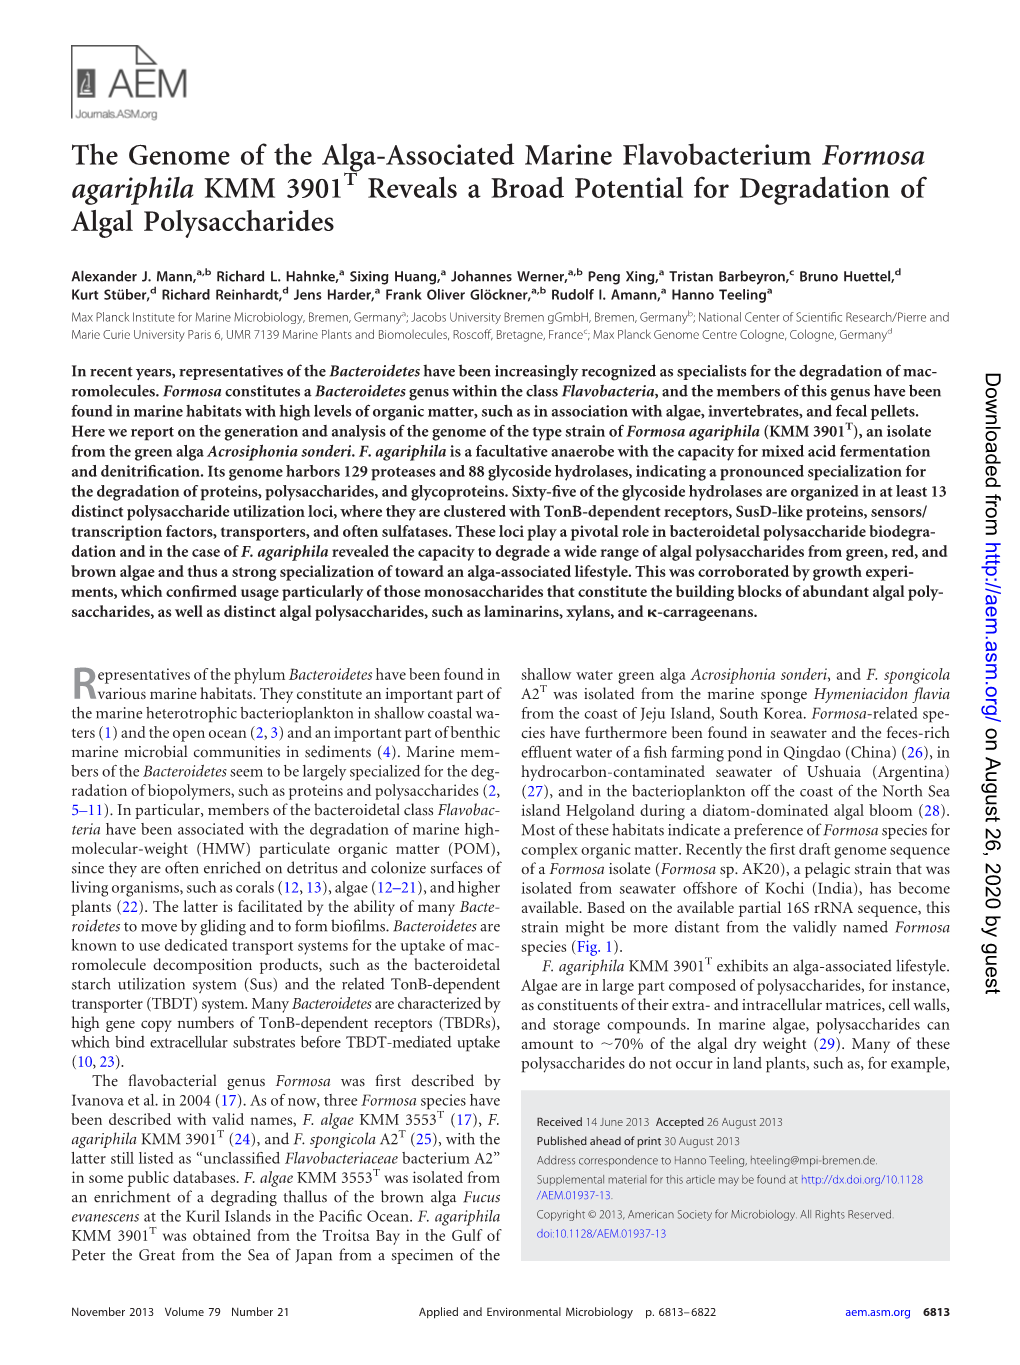 The Genome of the Alga-Associated Marine Flavobacterium Formosa Agariphila KMM 3901T Reveals a Broad Potential for Degradation of Algal Polysaccharides